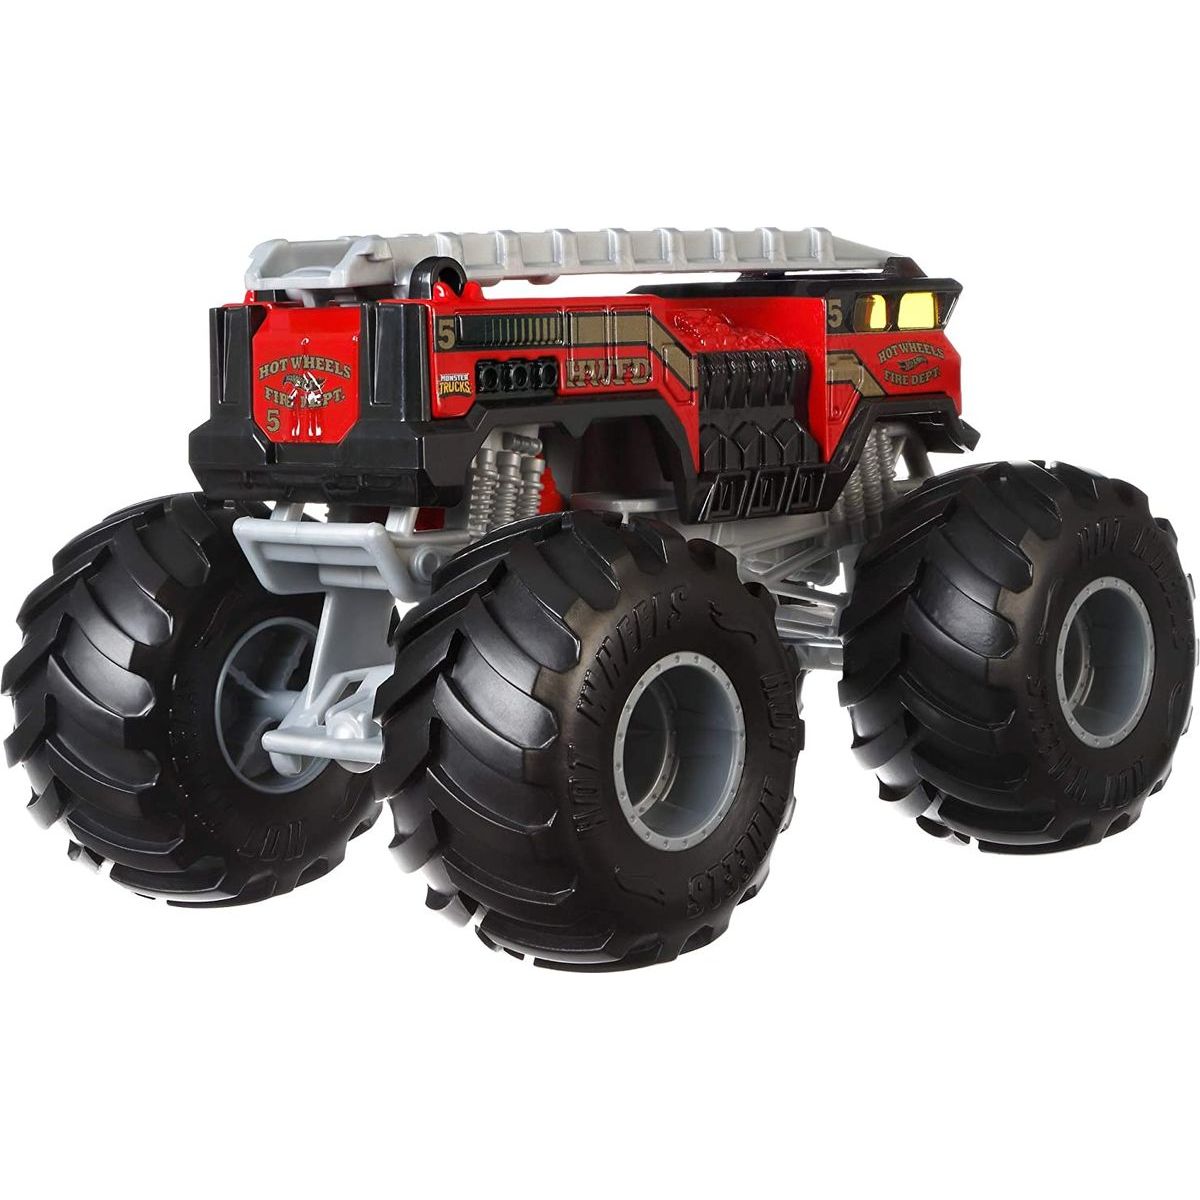 Hot Wheels Monster trucks velkÃ½ truck 5 Alarm Red | MaxÃ­kovy hraÄ ky